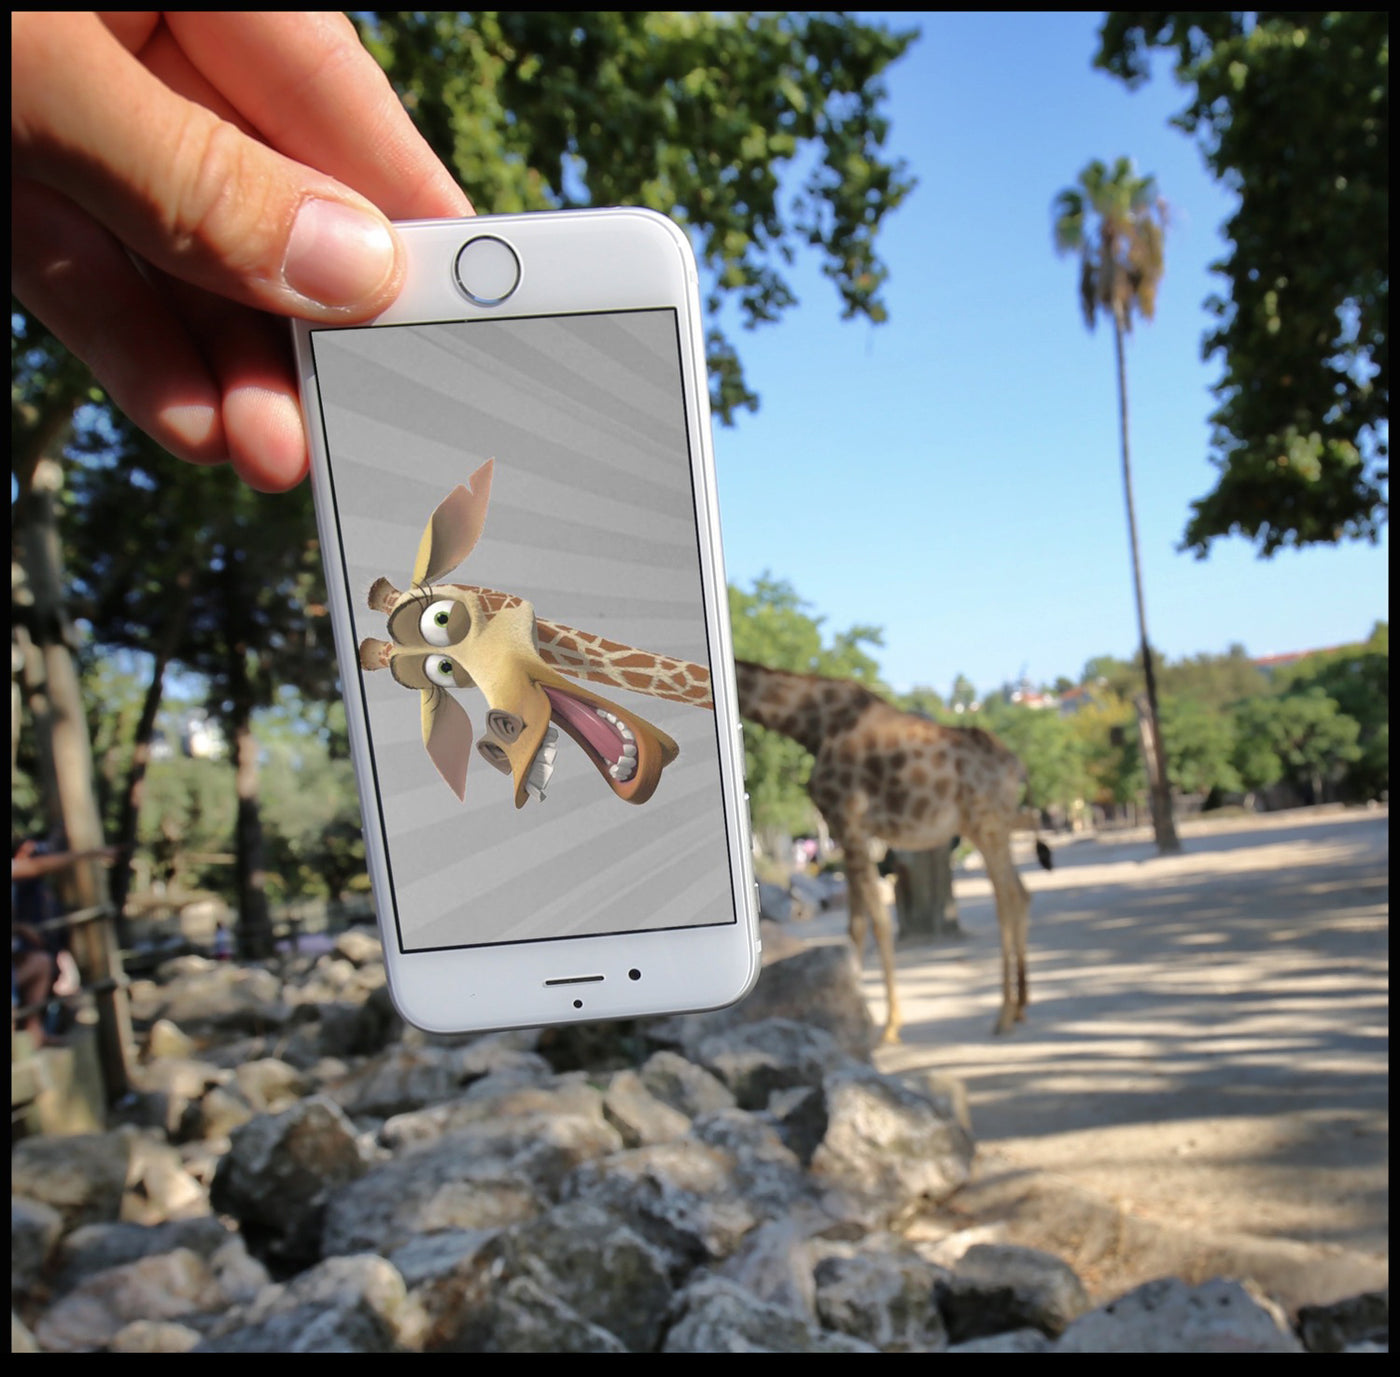 Smartphone Fun with Virtual Reality